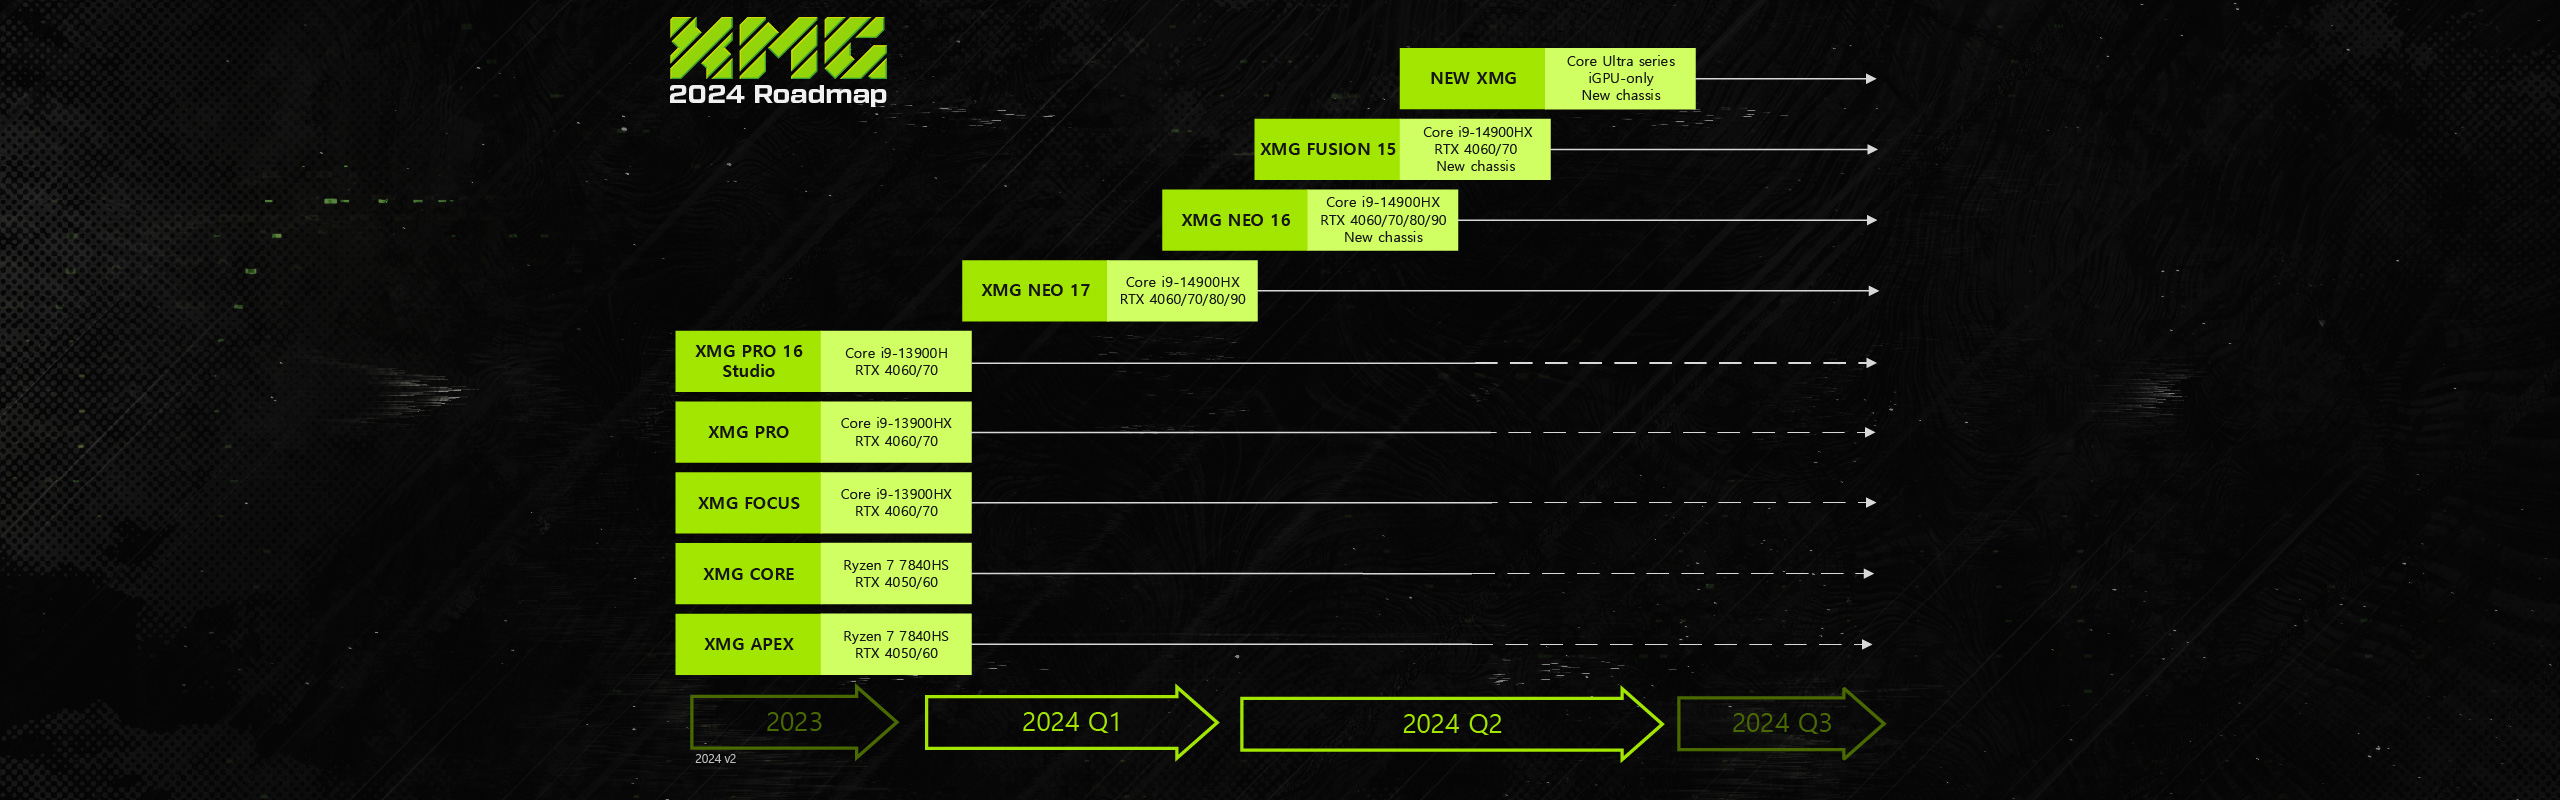 XMG Roadmap 2024